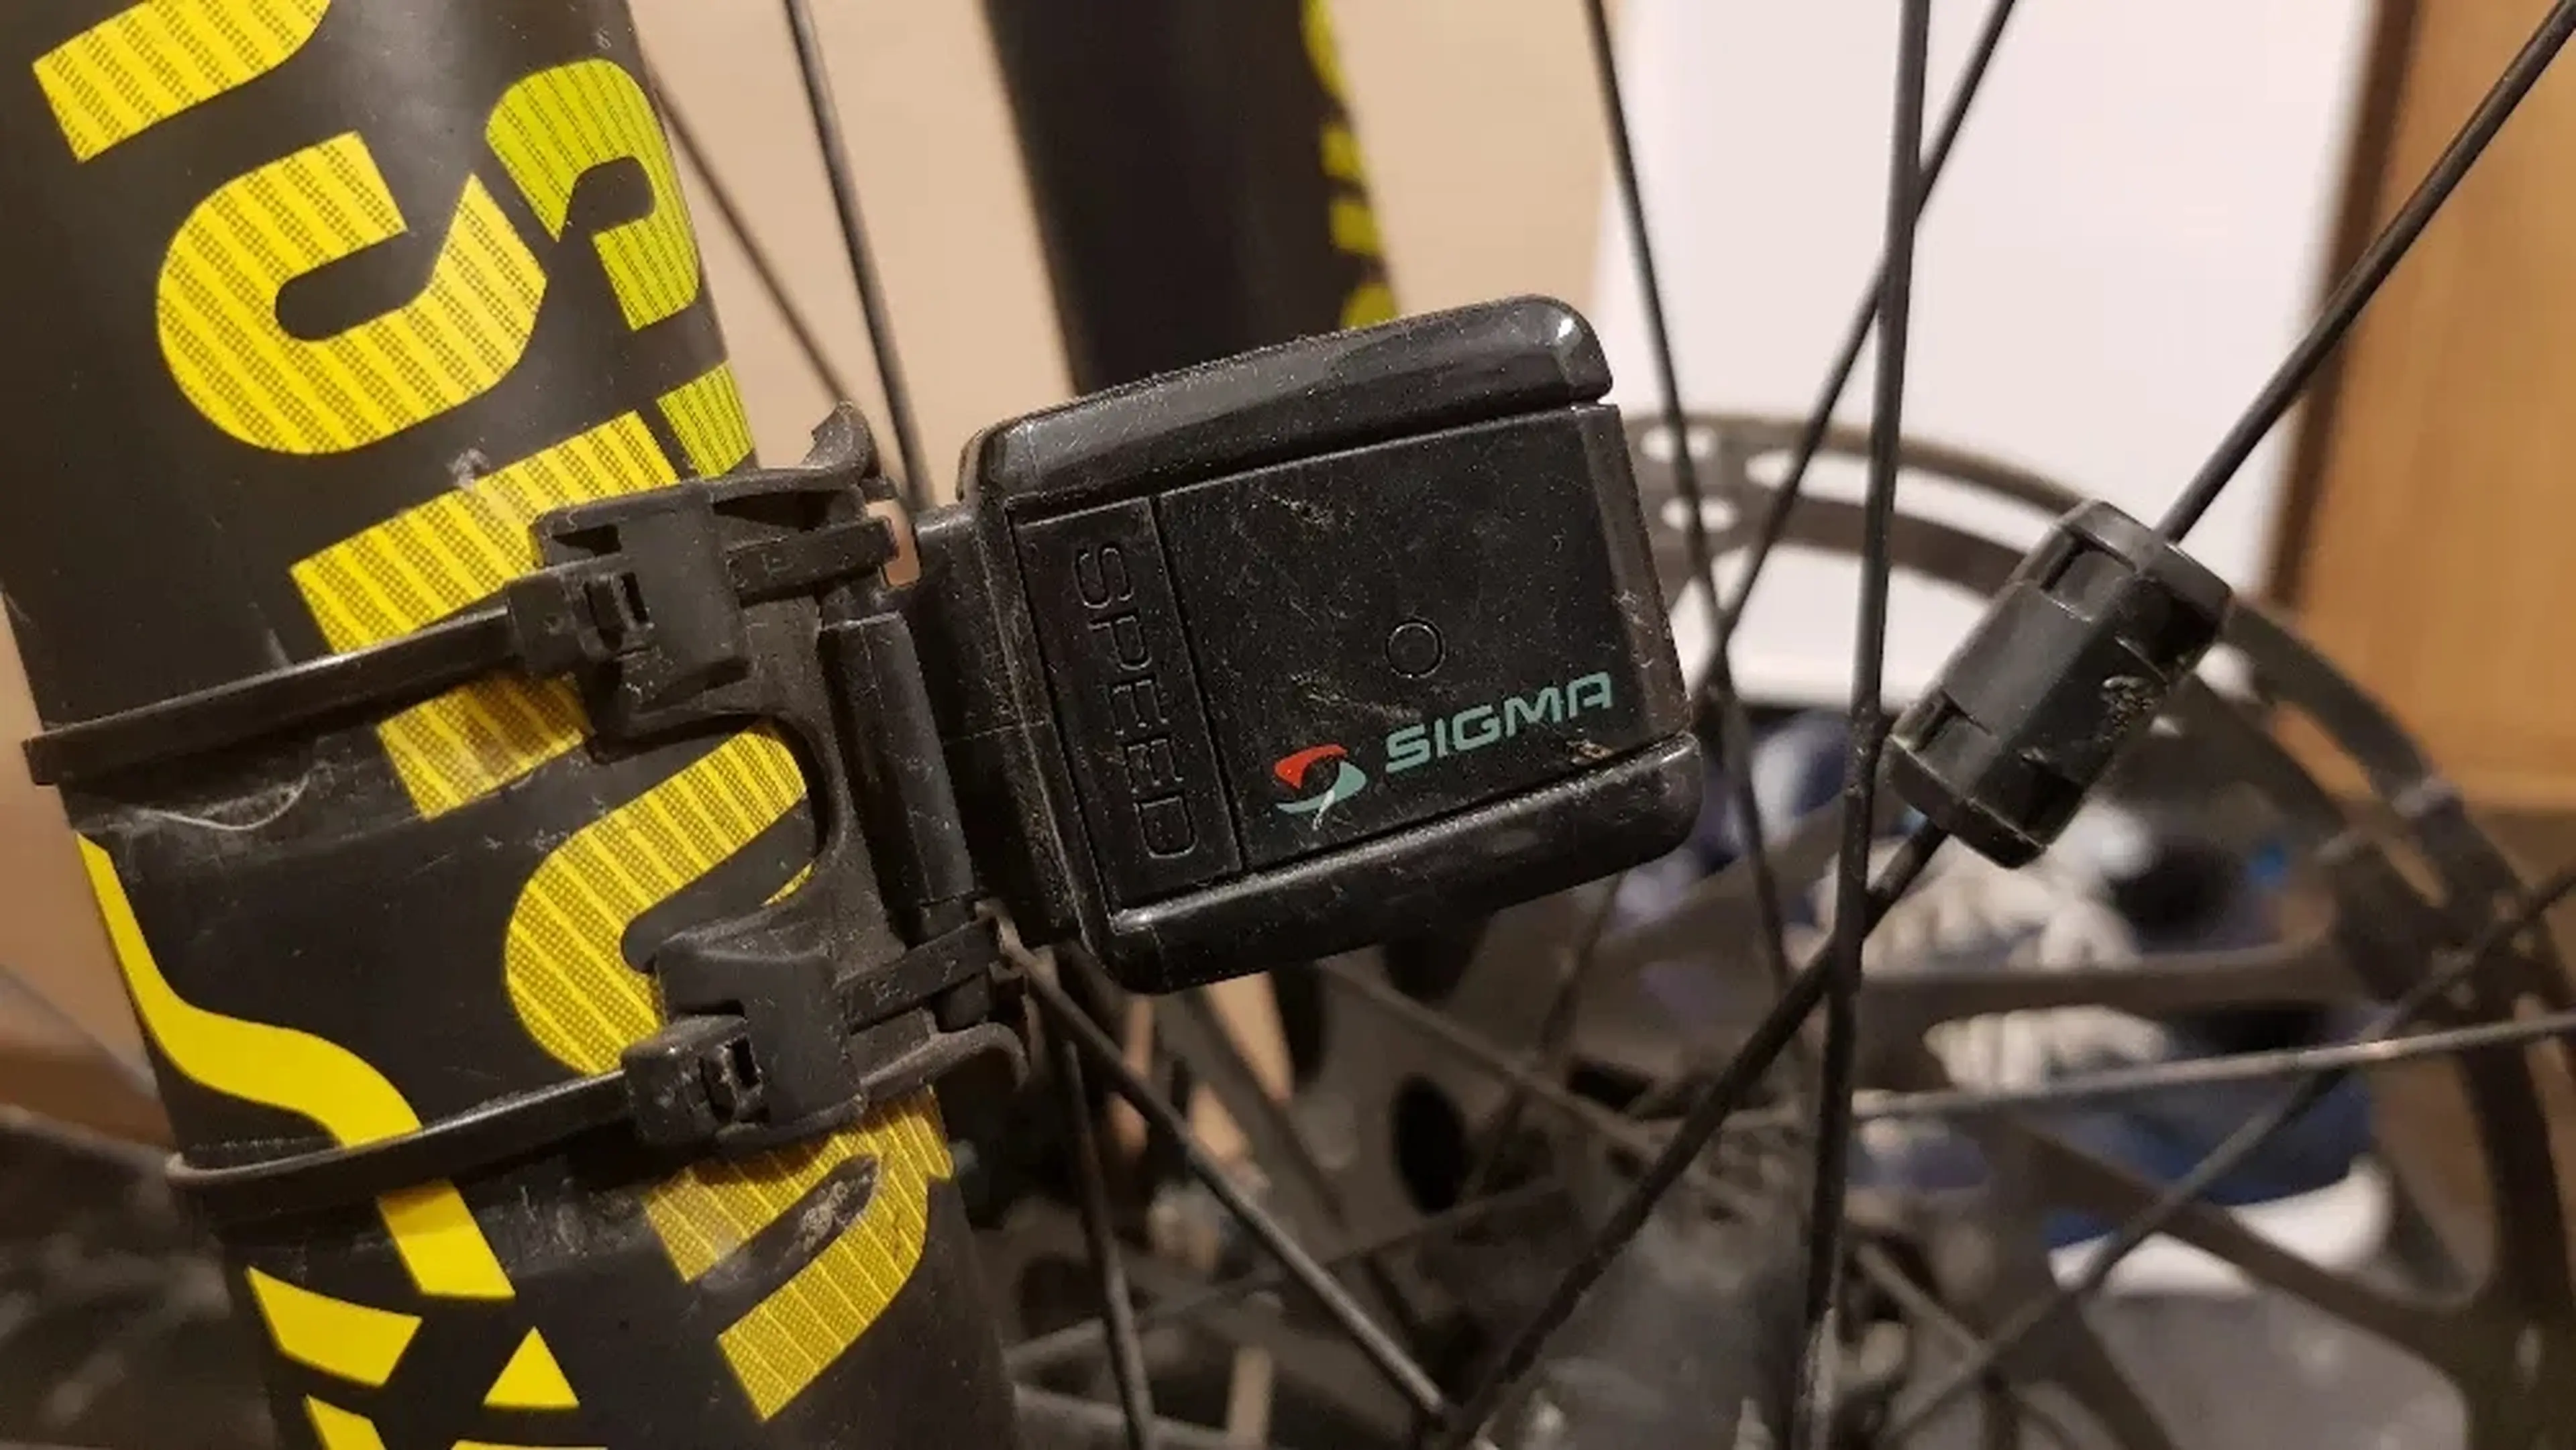 1. Sigma Sport STS Wireless Speed Transmitter